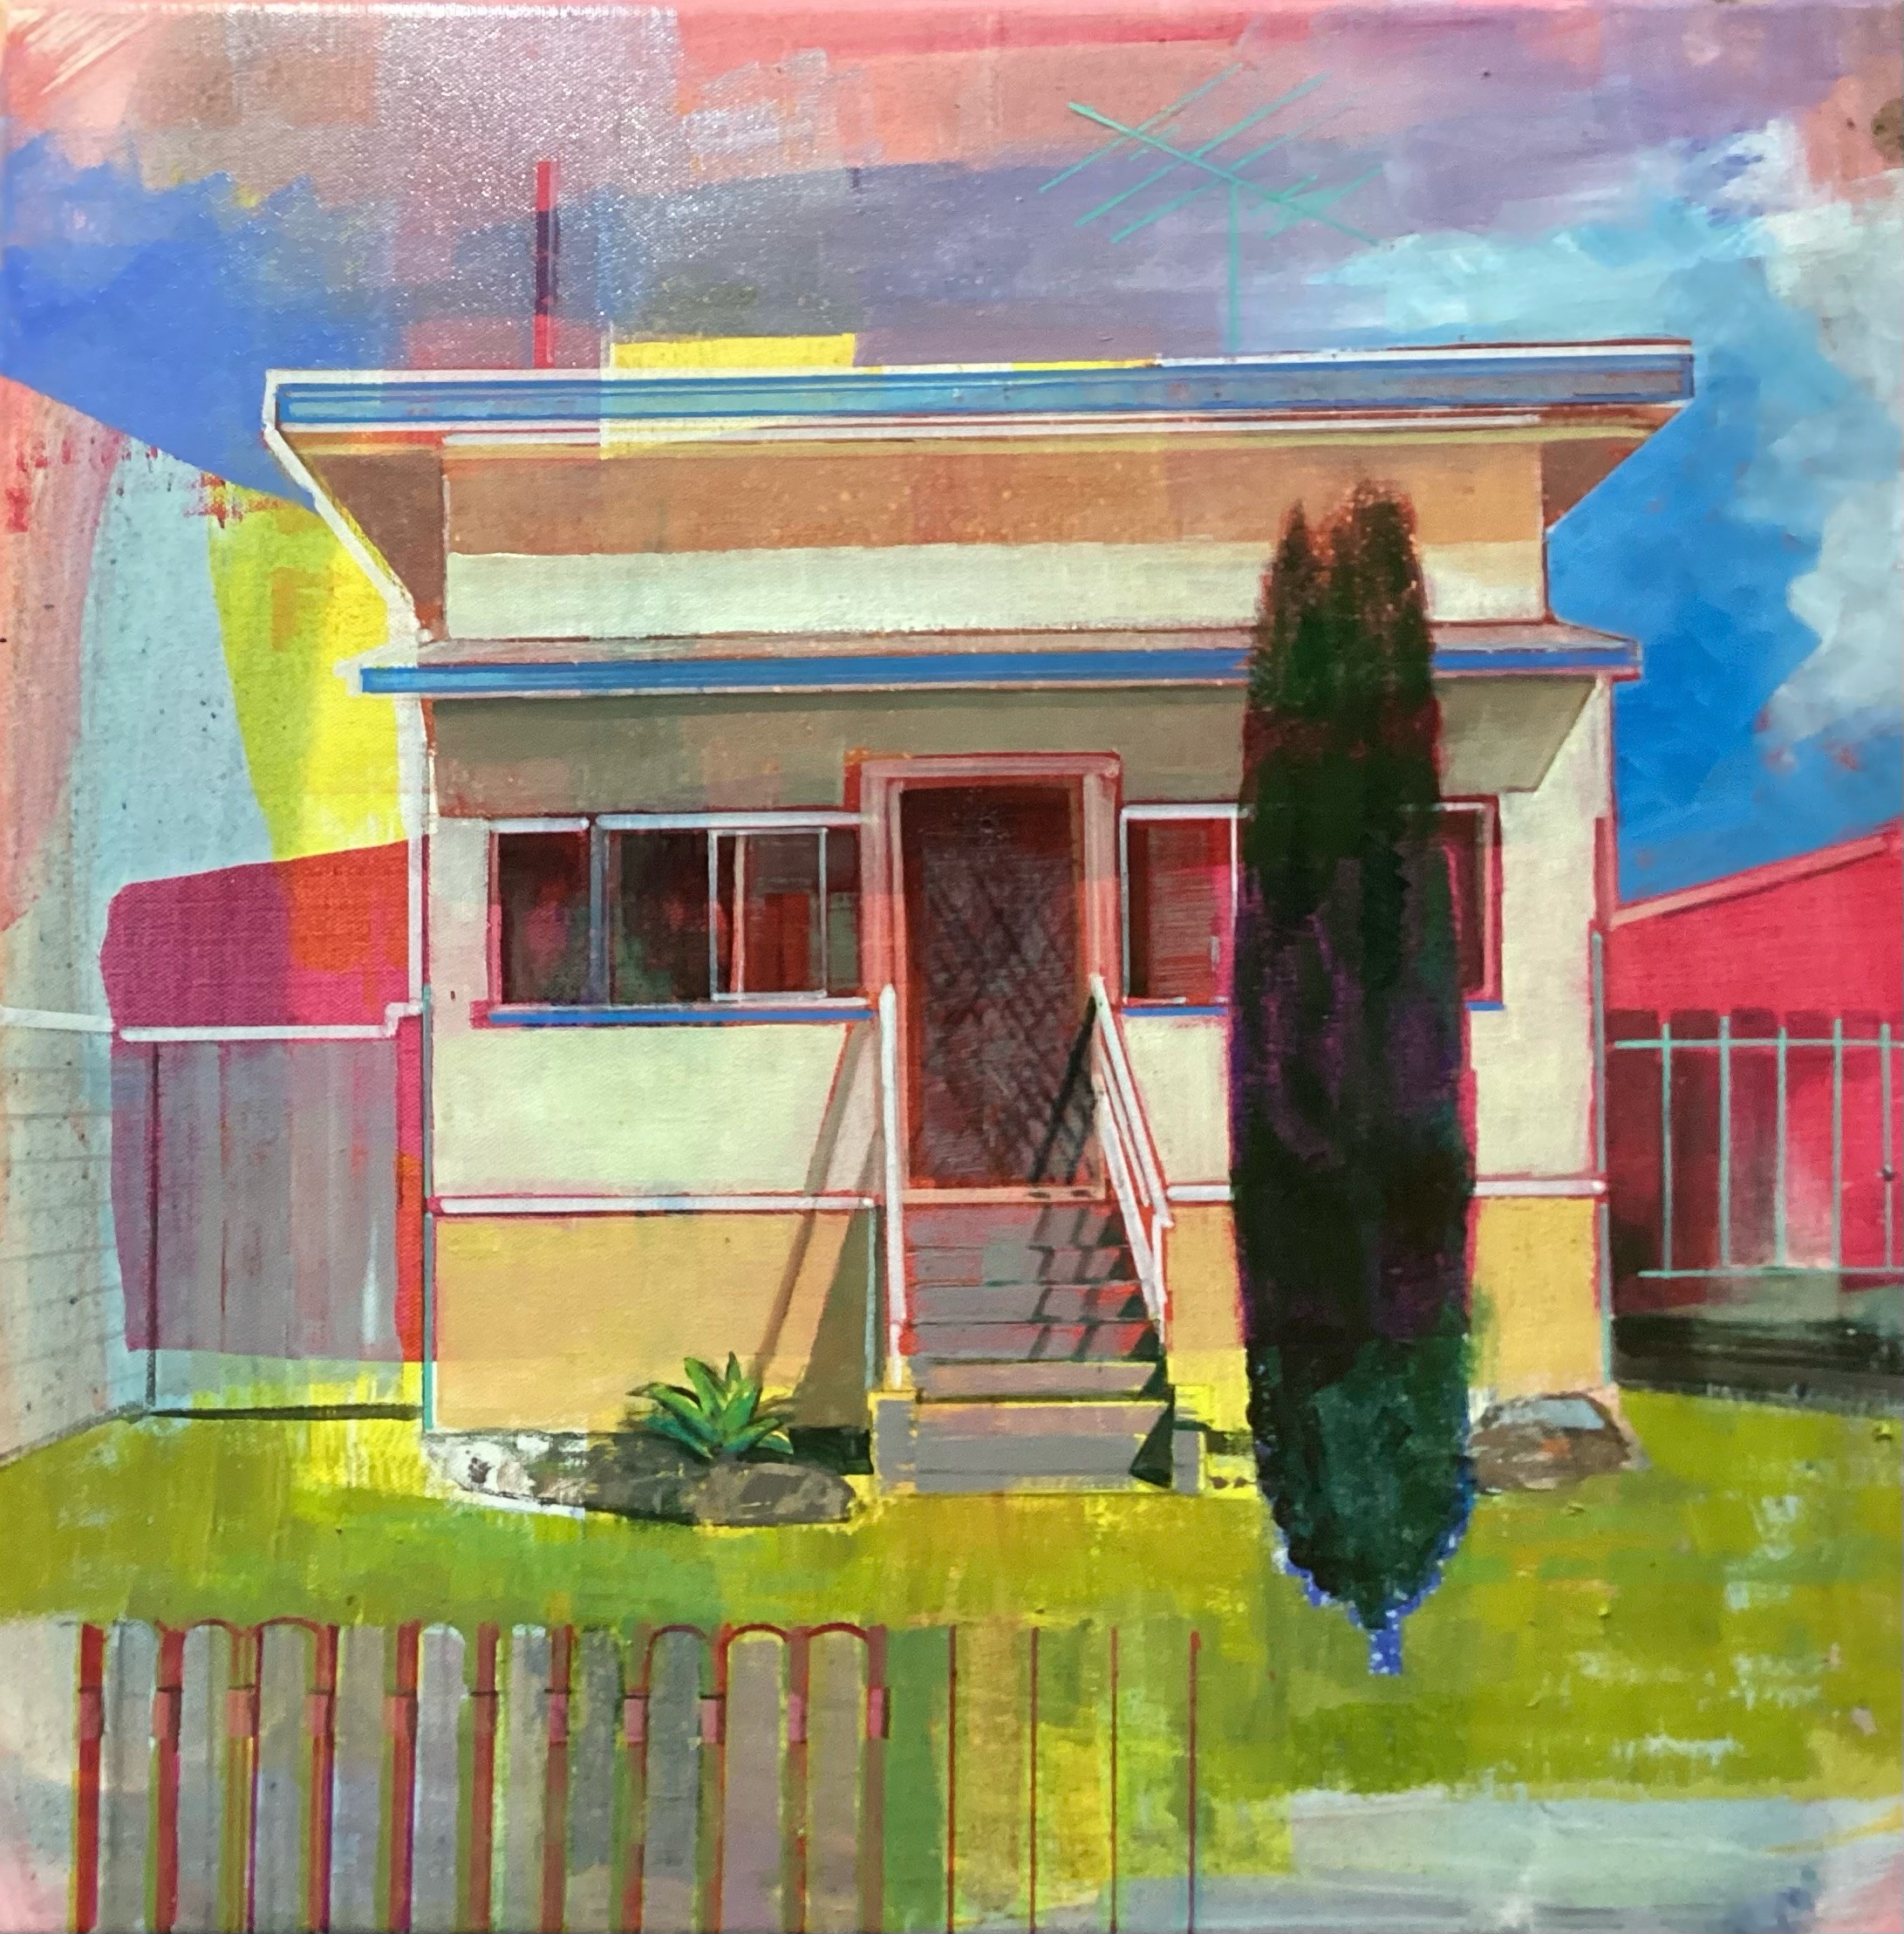 Nick Olsen 'House in the Sun' oil on canvas 50 x 50cm $2,800